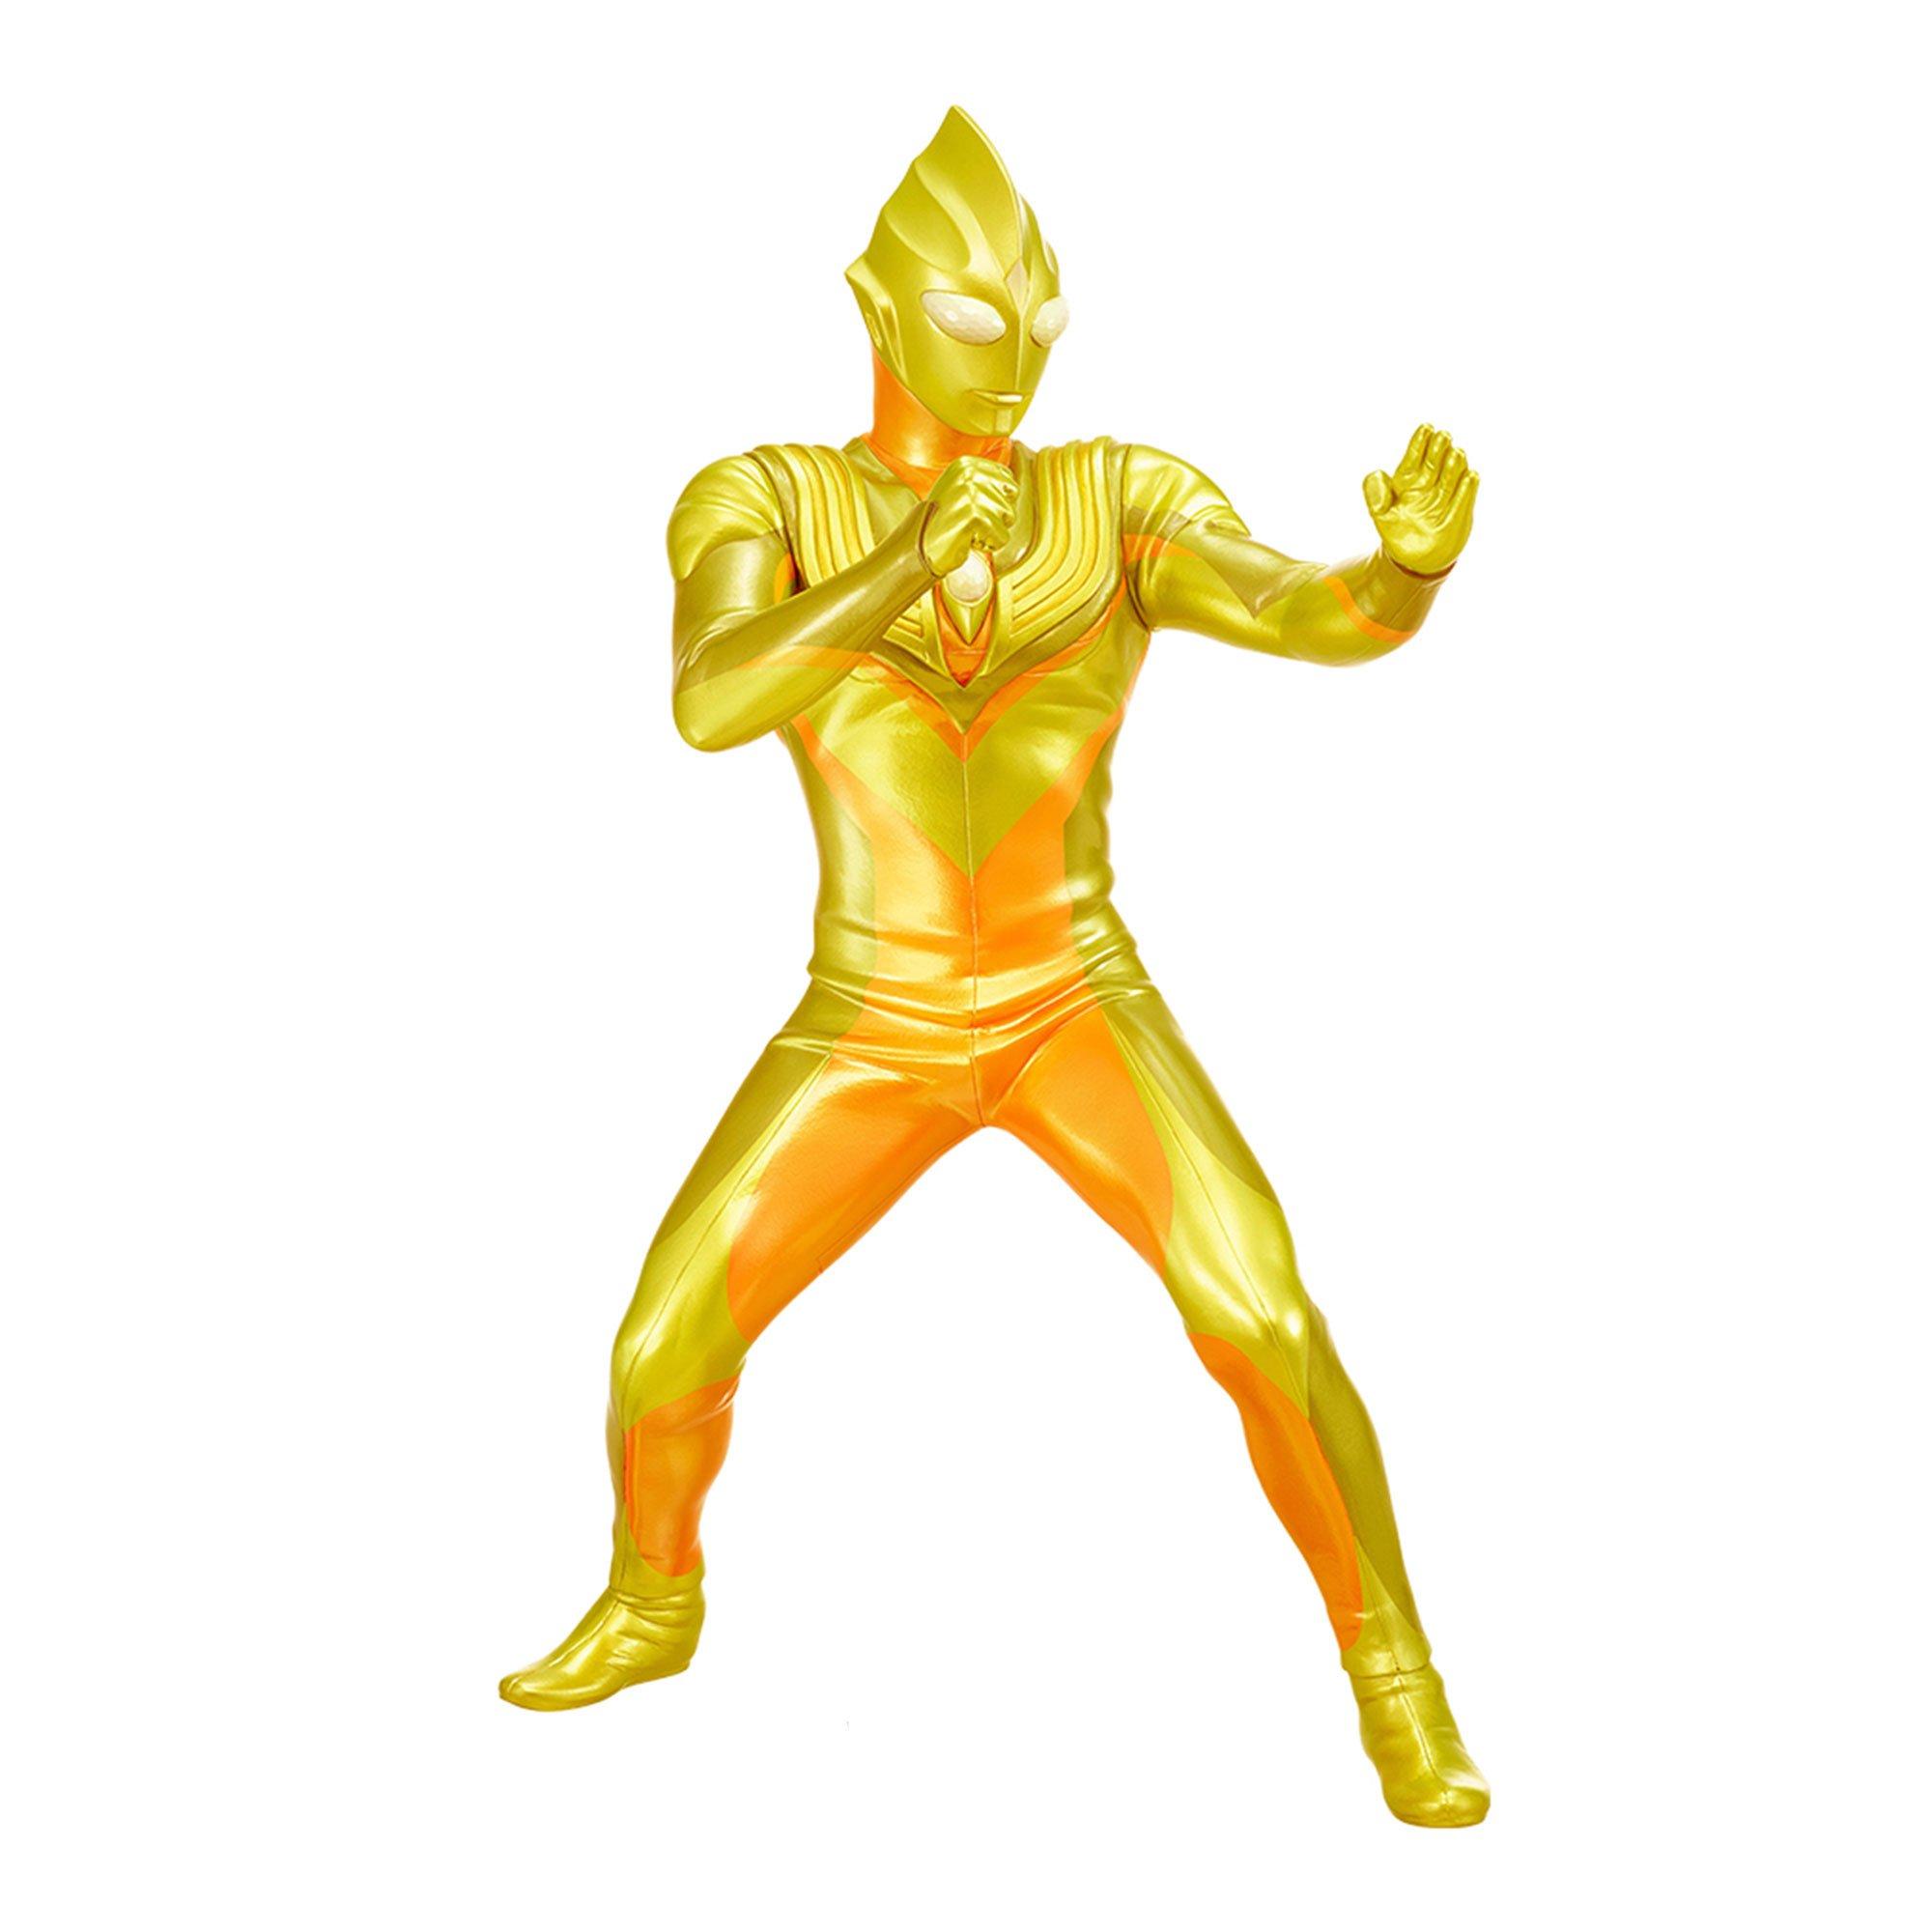 https://media.gamestop.com/i/gamestop/20004816/Banpresto-Heros-Brave-Statue-Ultraman-Tiga-Glitter-Tiga-6.7-in-Figure?$pdp$